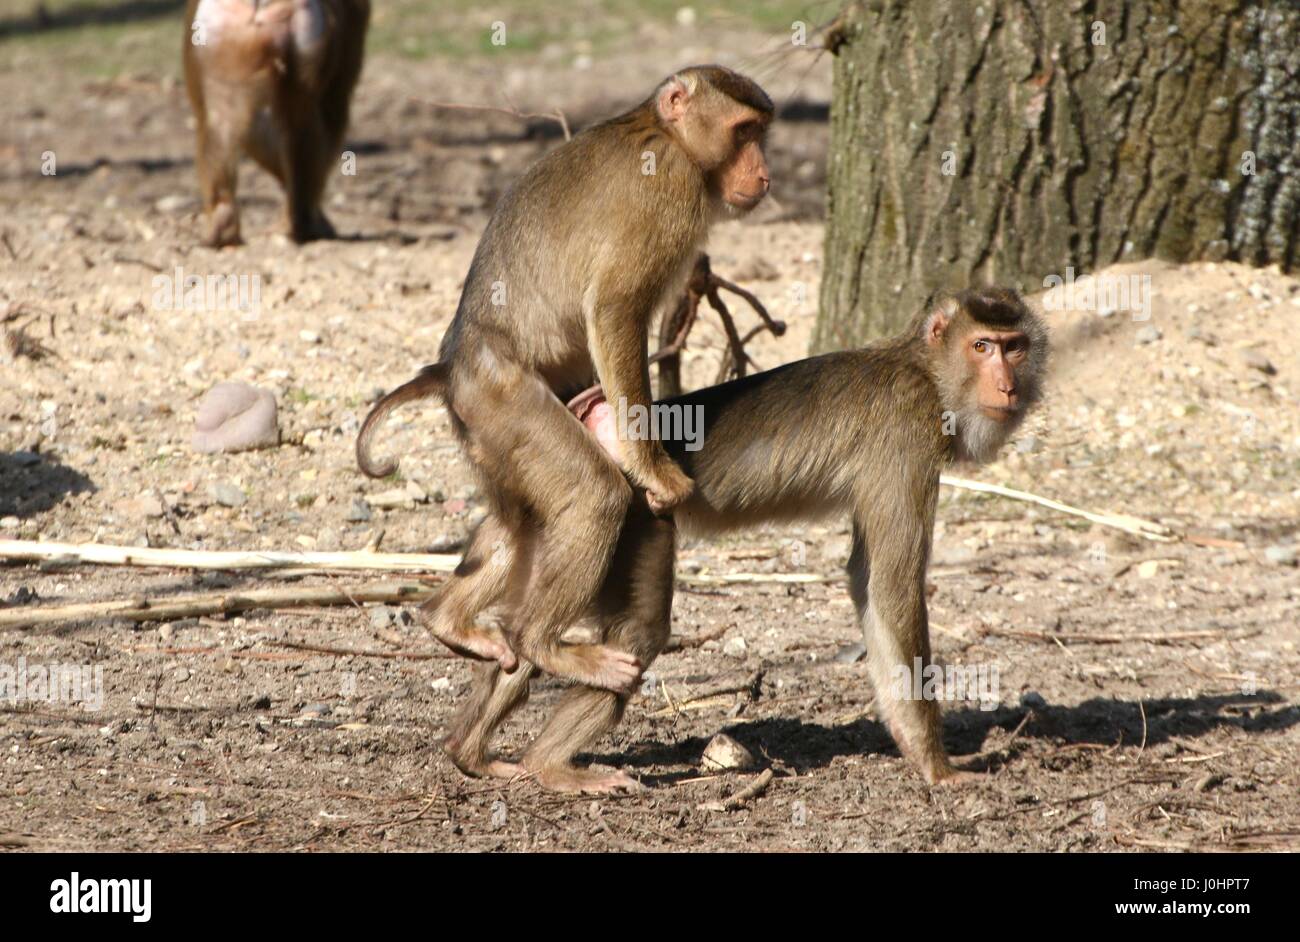 Mating Asian Southern pig-tailed macaques (Macaca nemestrina). Stock Photo